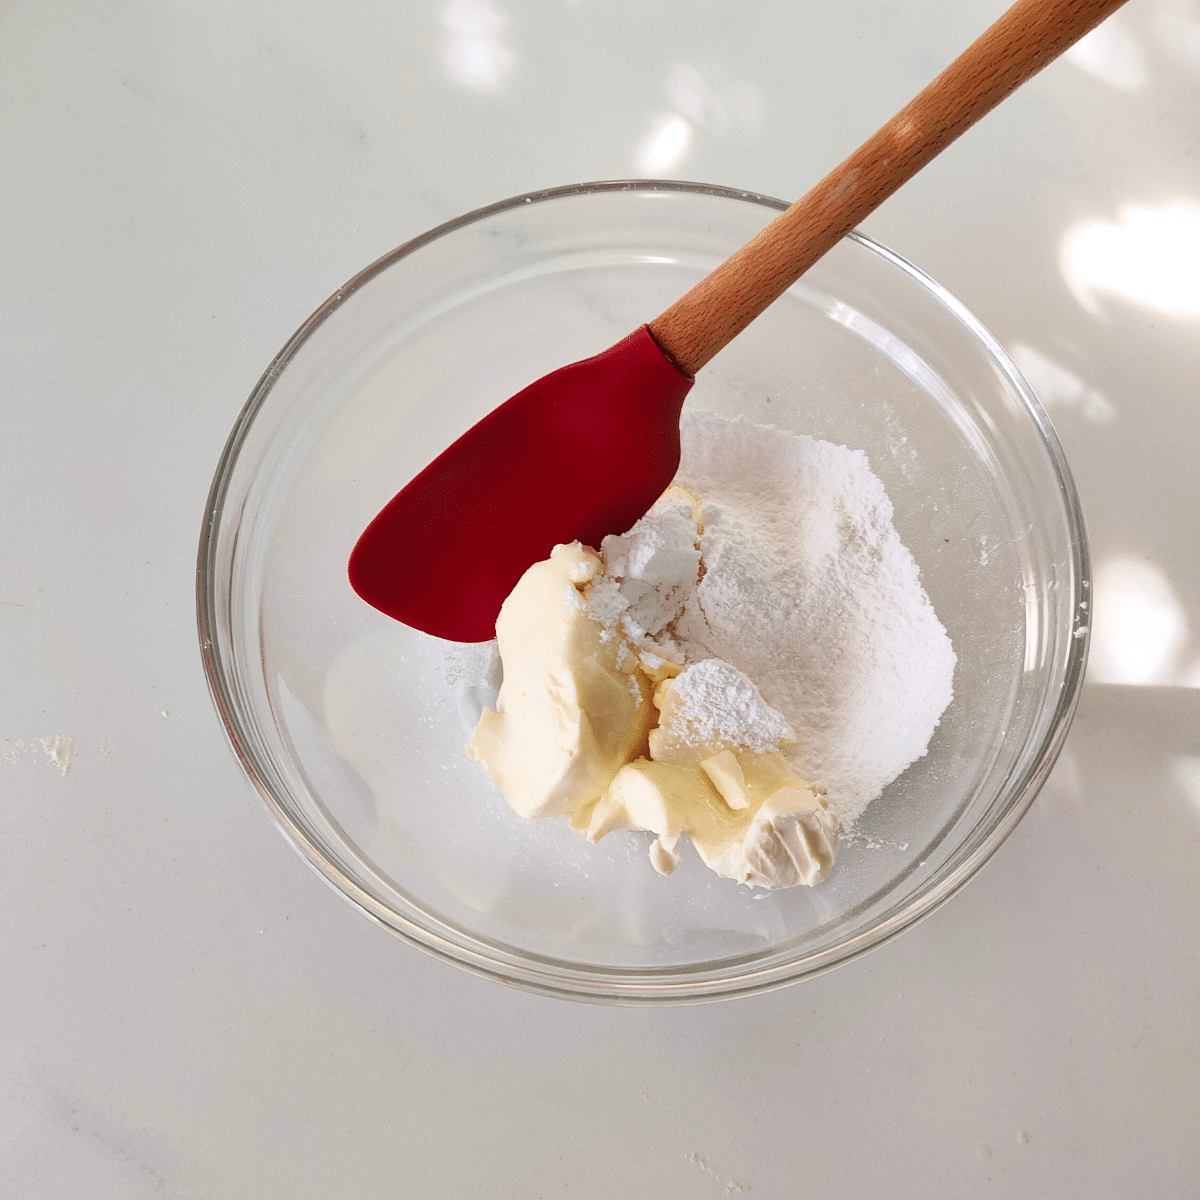 Make cream cheese topping